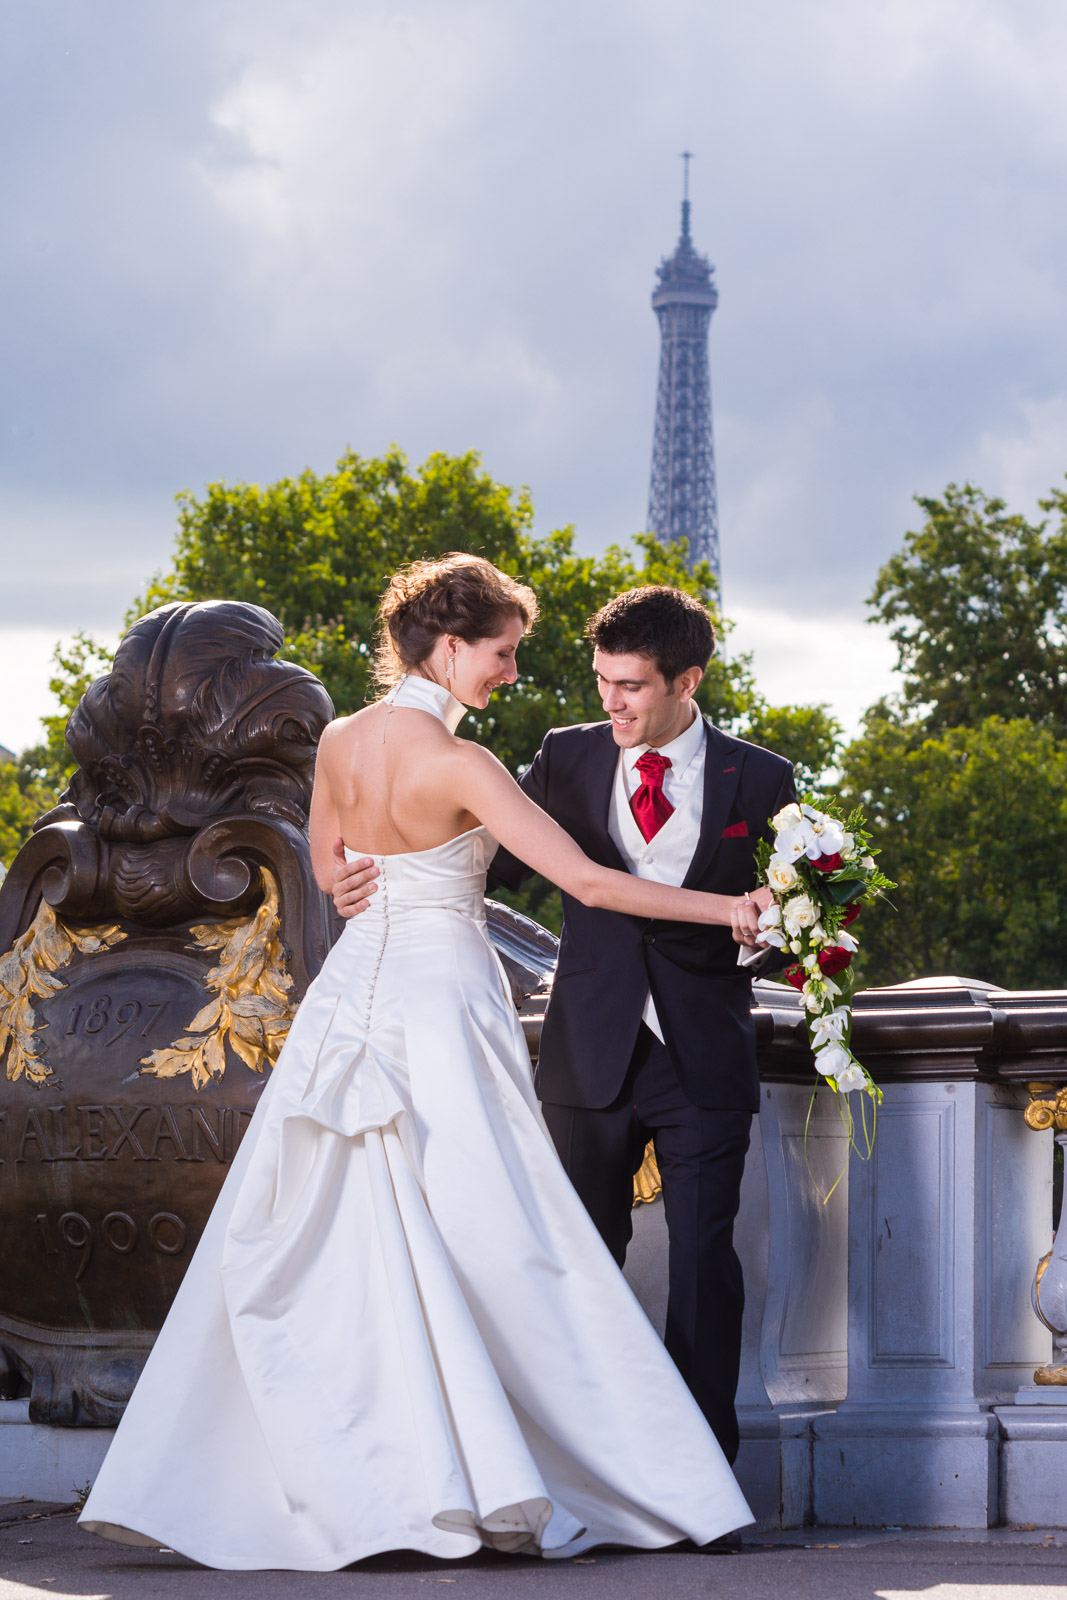 20130831-155505-Weddings & Portraits-untitled-Premium-Paris.jpg